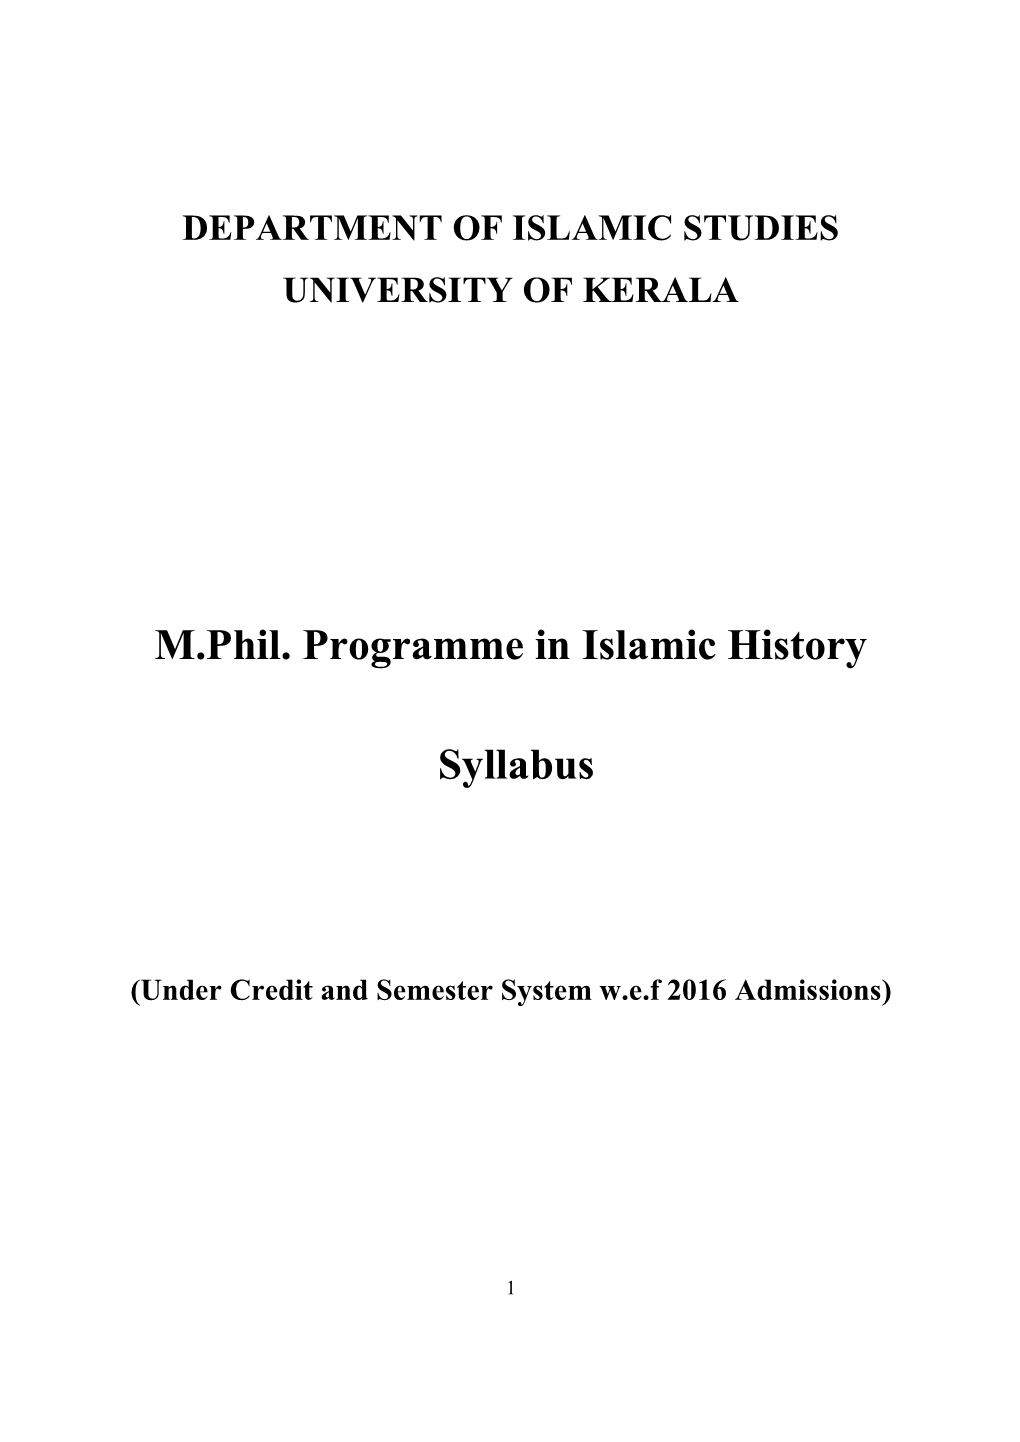 M.Phil. Programme in Islamic History Syllabus